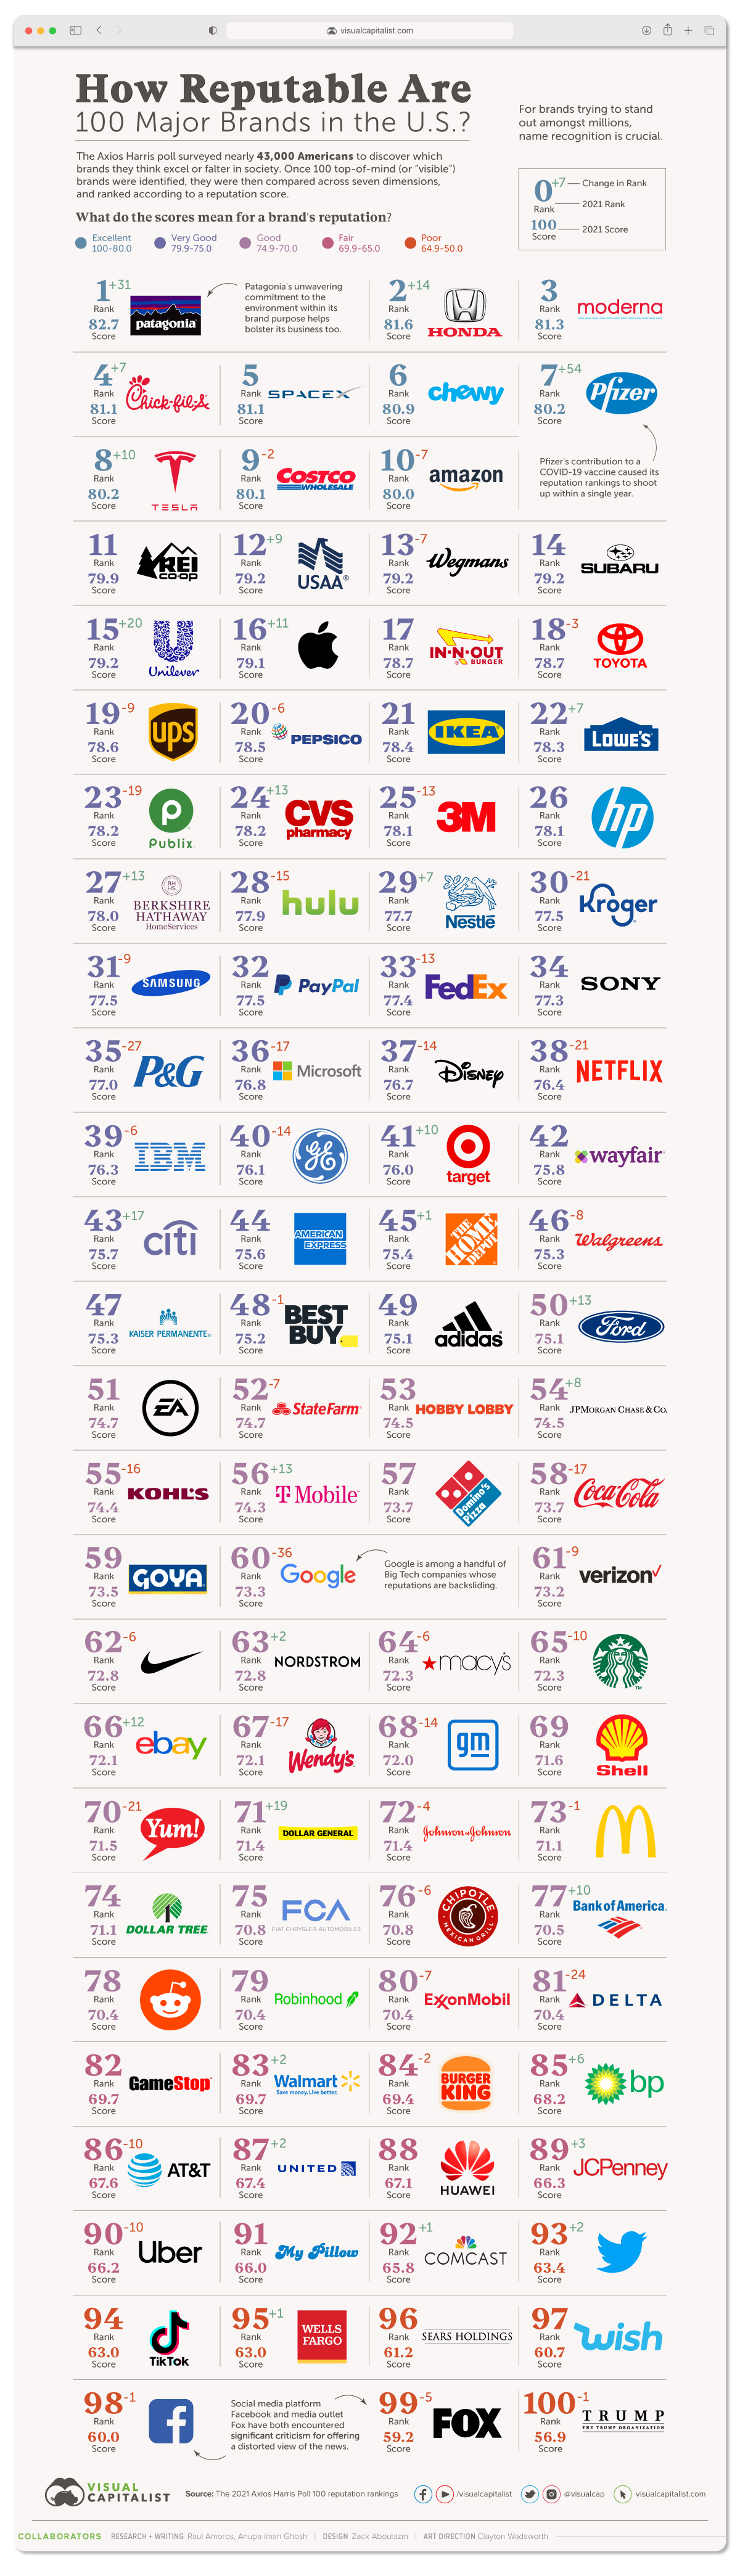 Brand Reputation of 100 Companies in America